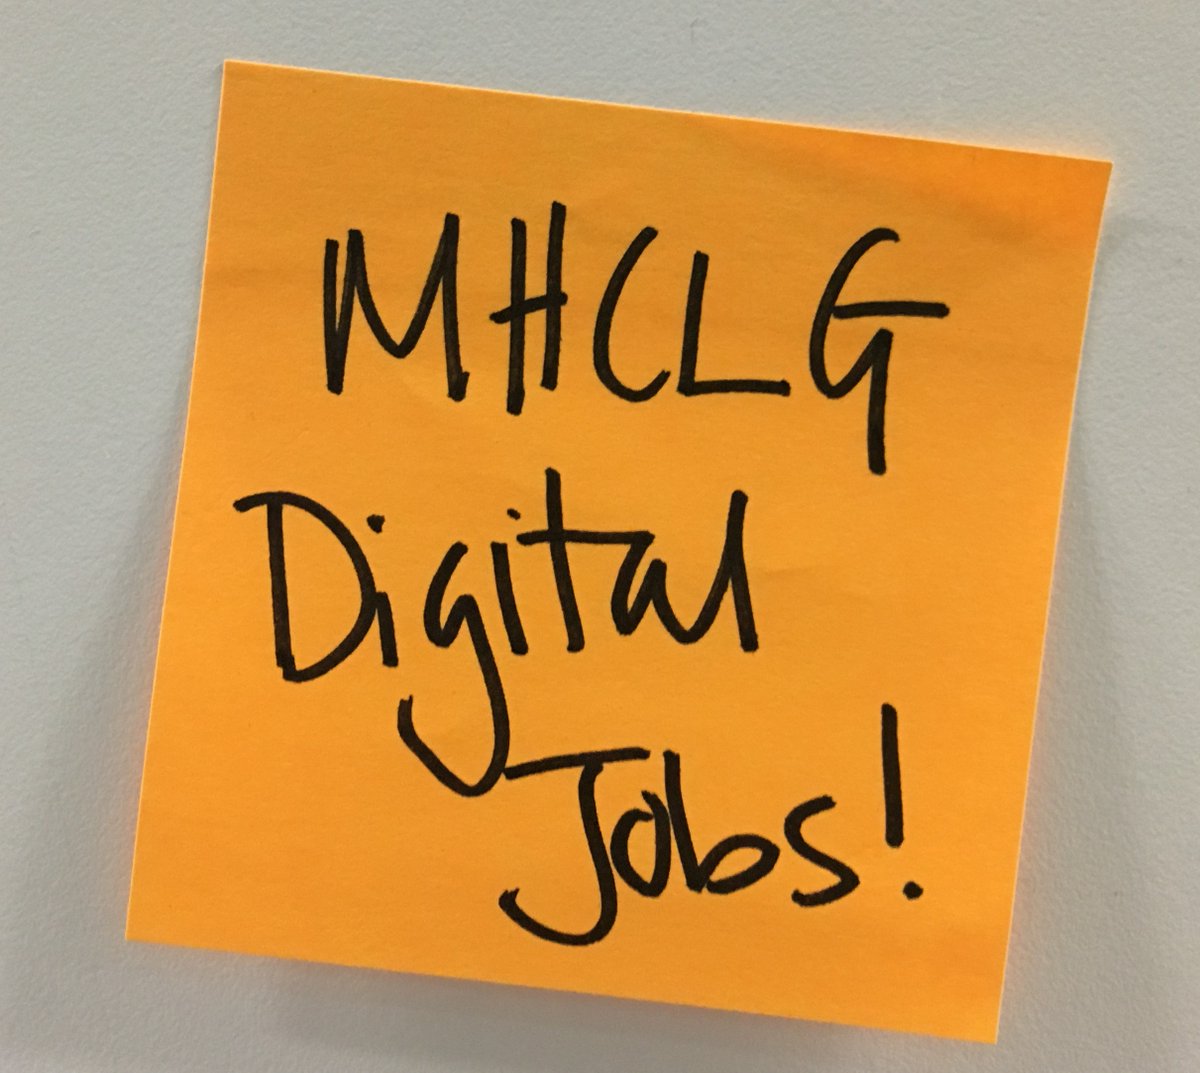 A post-it saying MHCLG Digital Jobs